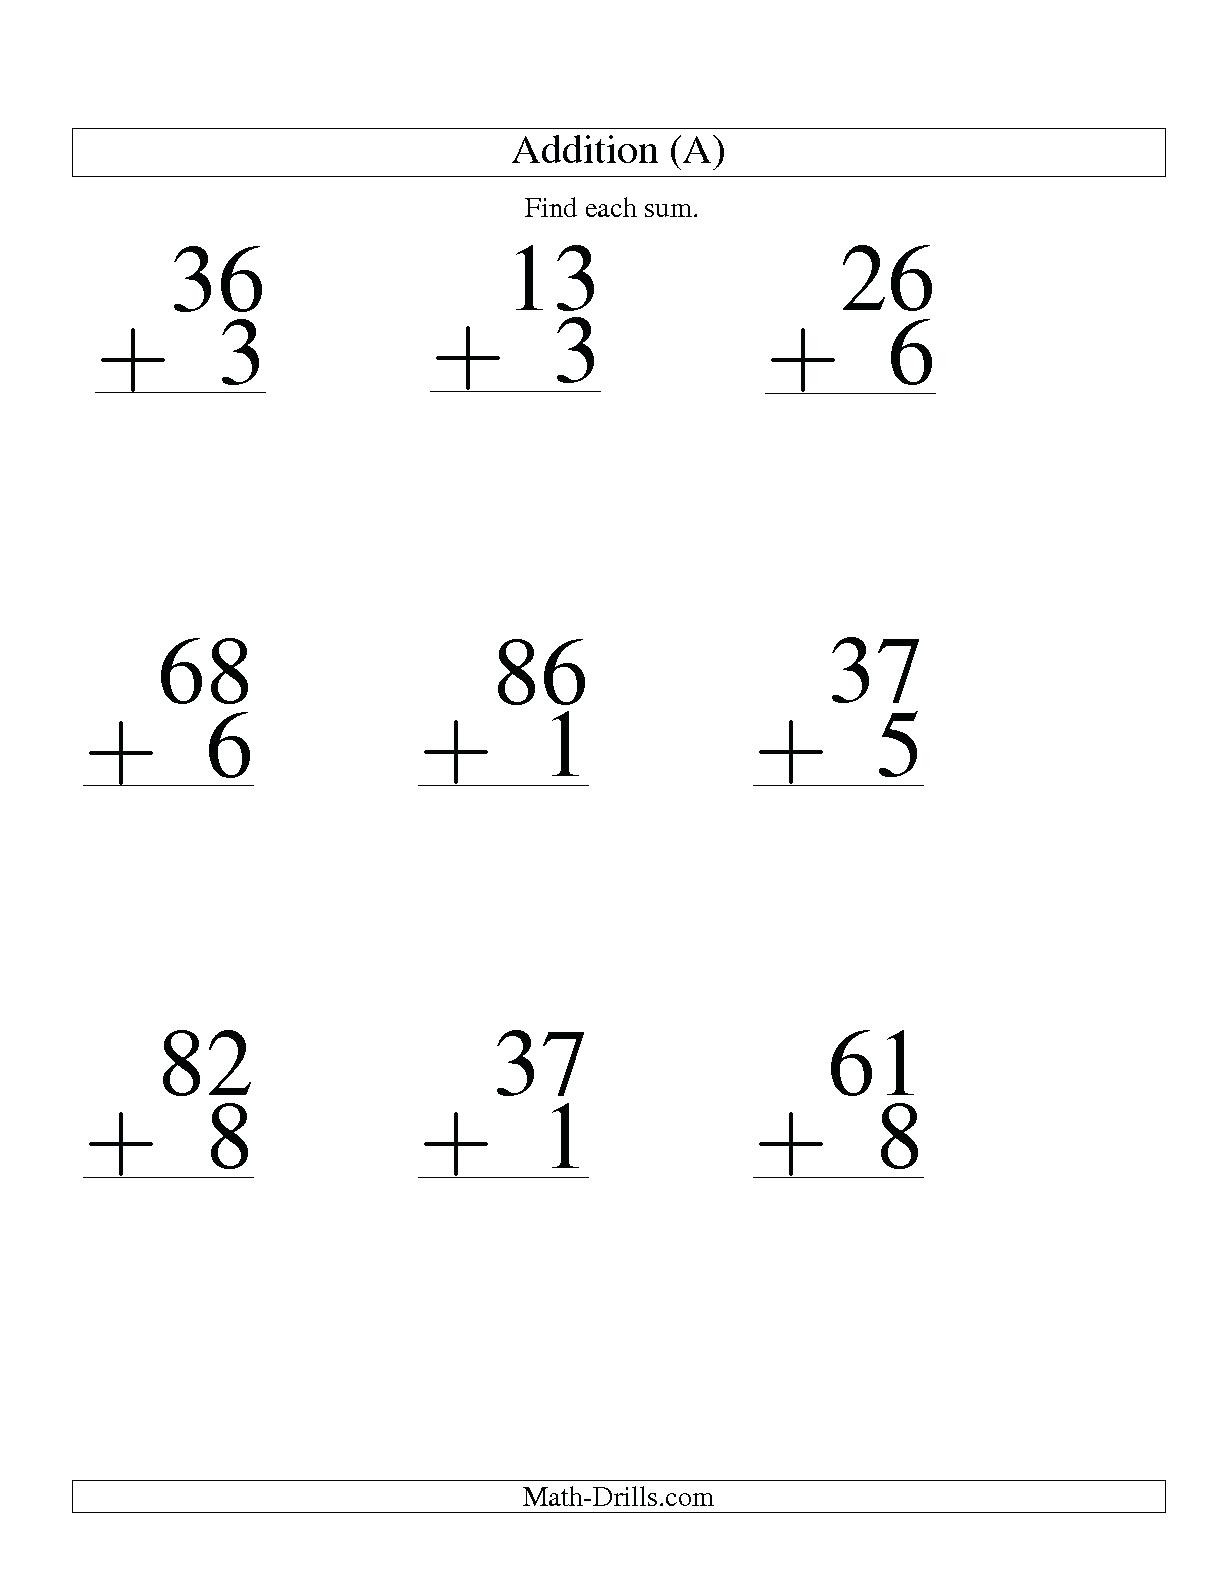 5 Free Math Worksheets First Grade 1 Addition Adding 2 ...